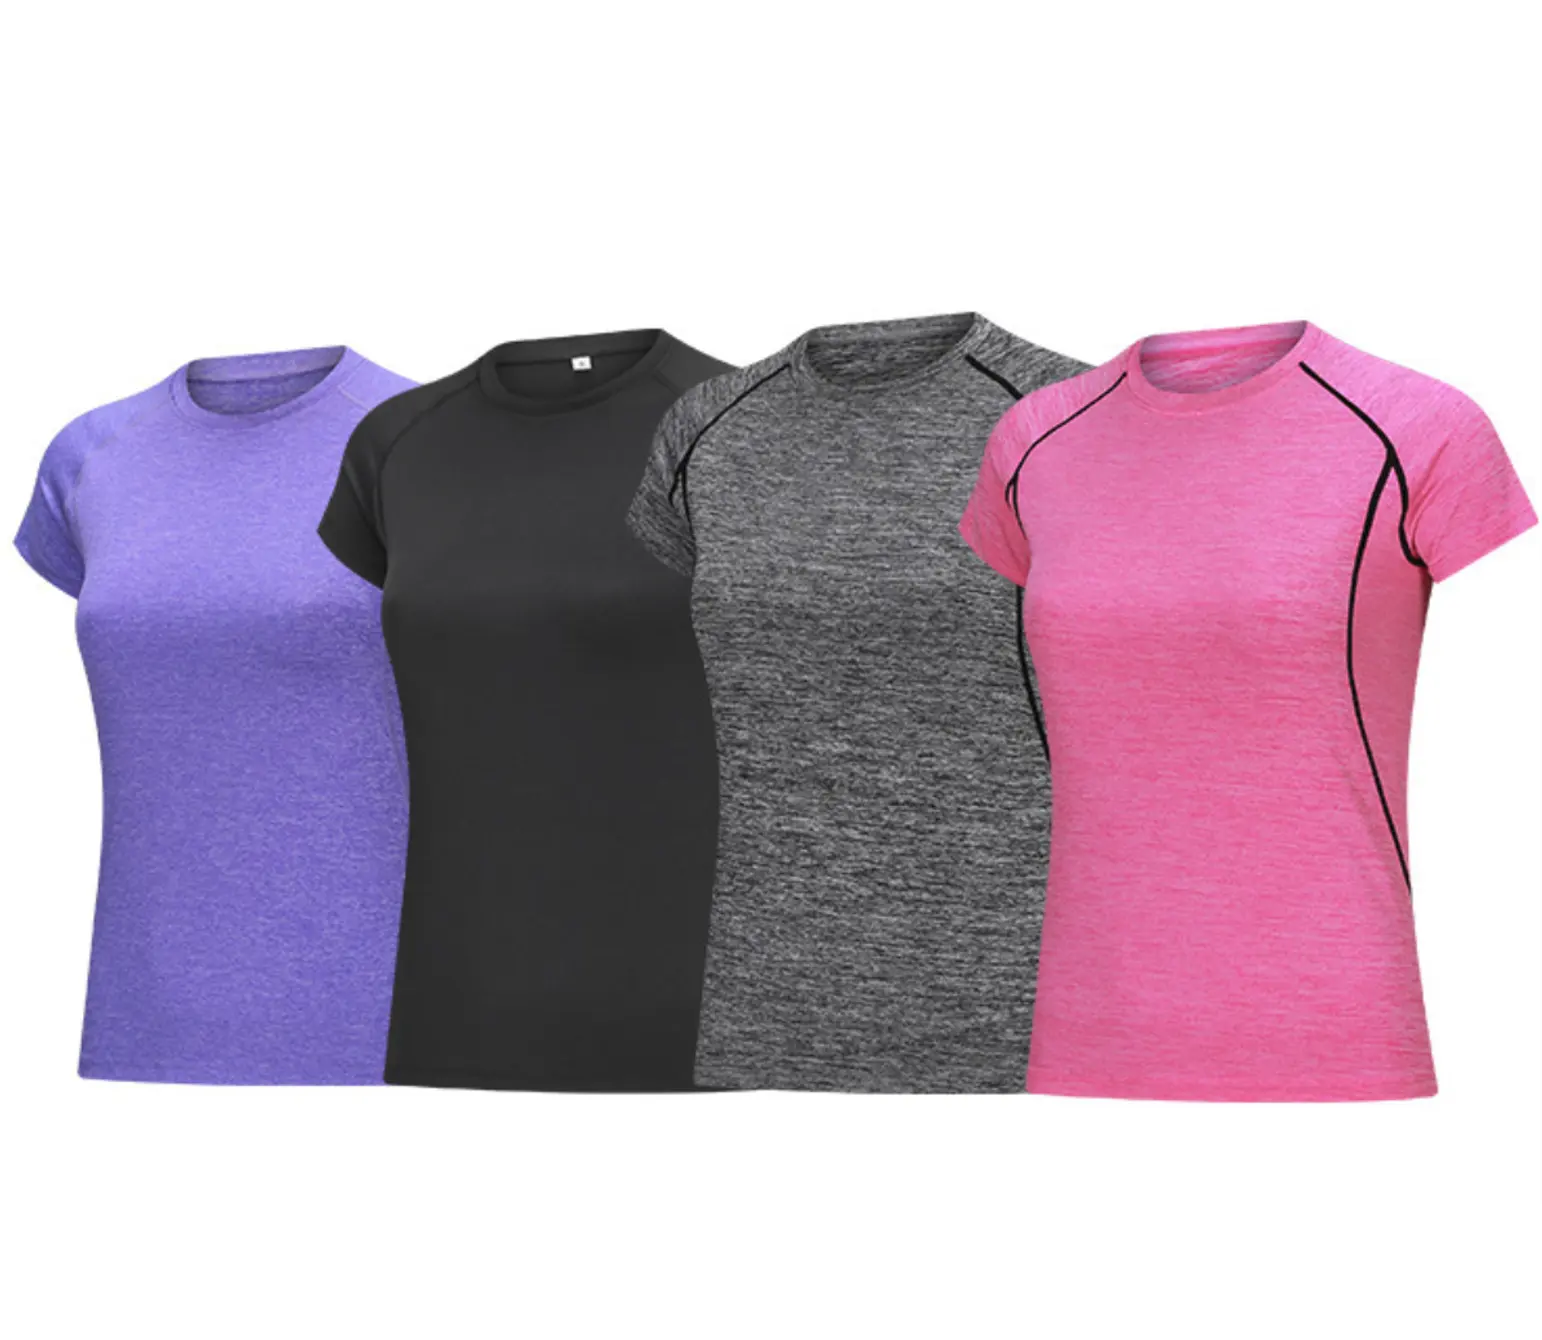 Women's Workout Quick Dry Custom Yoga T-Shirt running short sleeves shirts sports top gym wear women